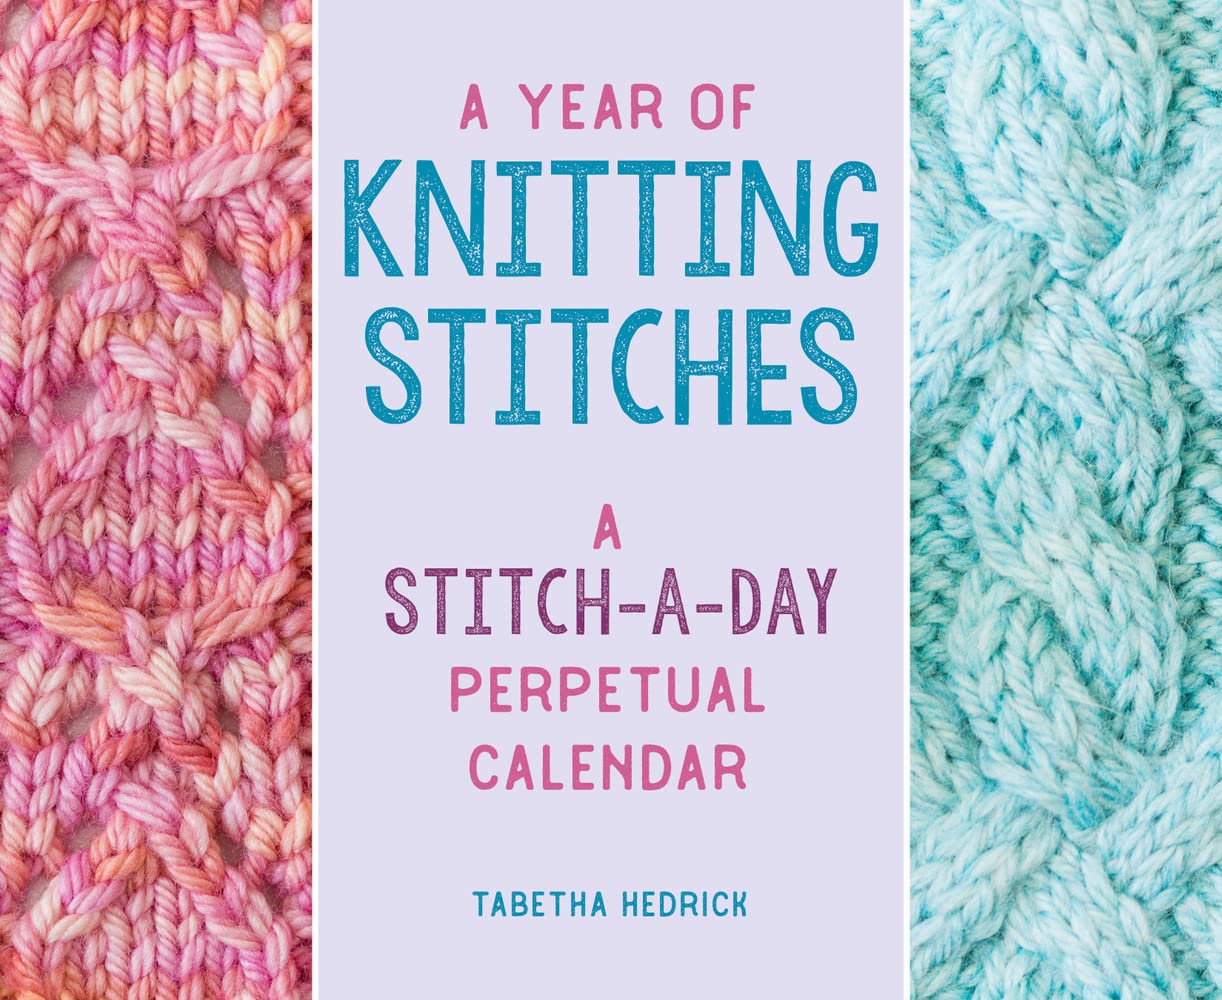 Mua A Year of Knitting Stitches A StitchaDay Perpetual Calendar trên